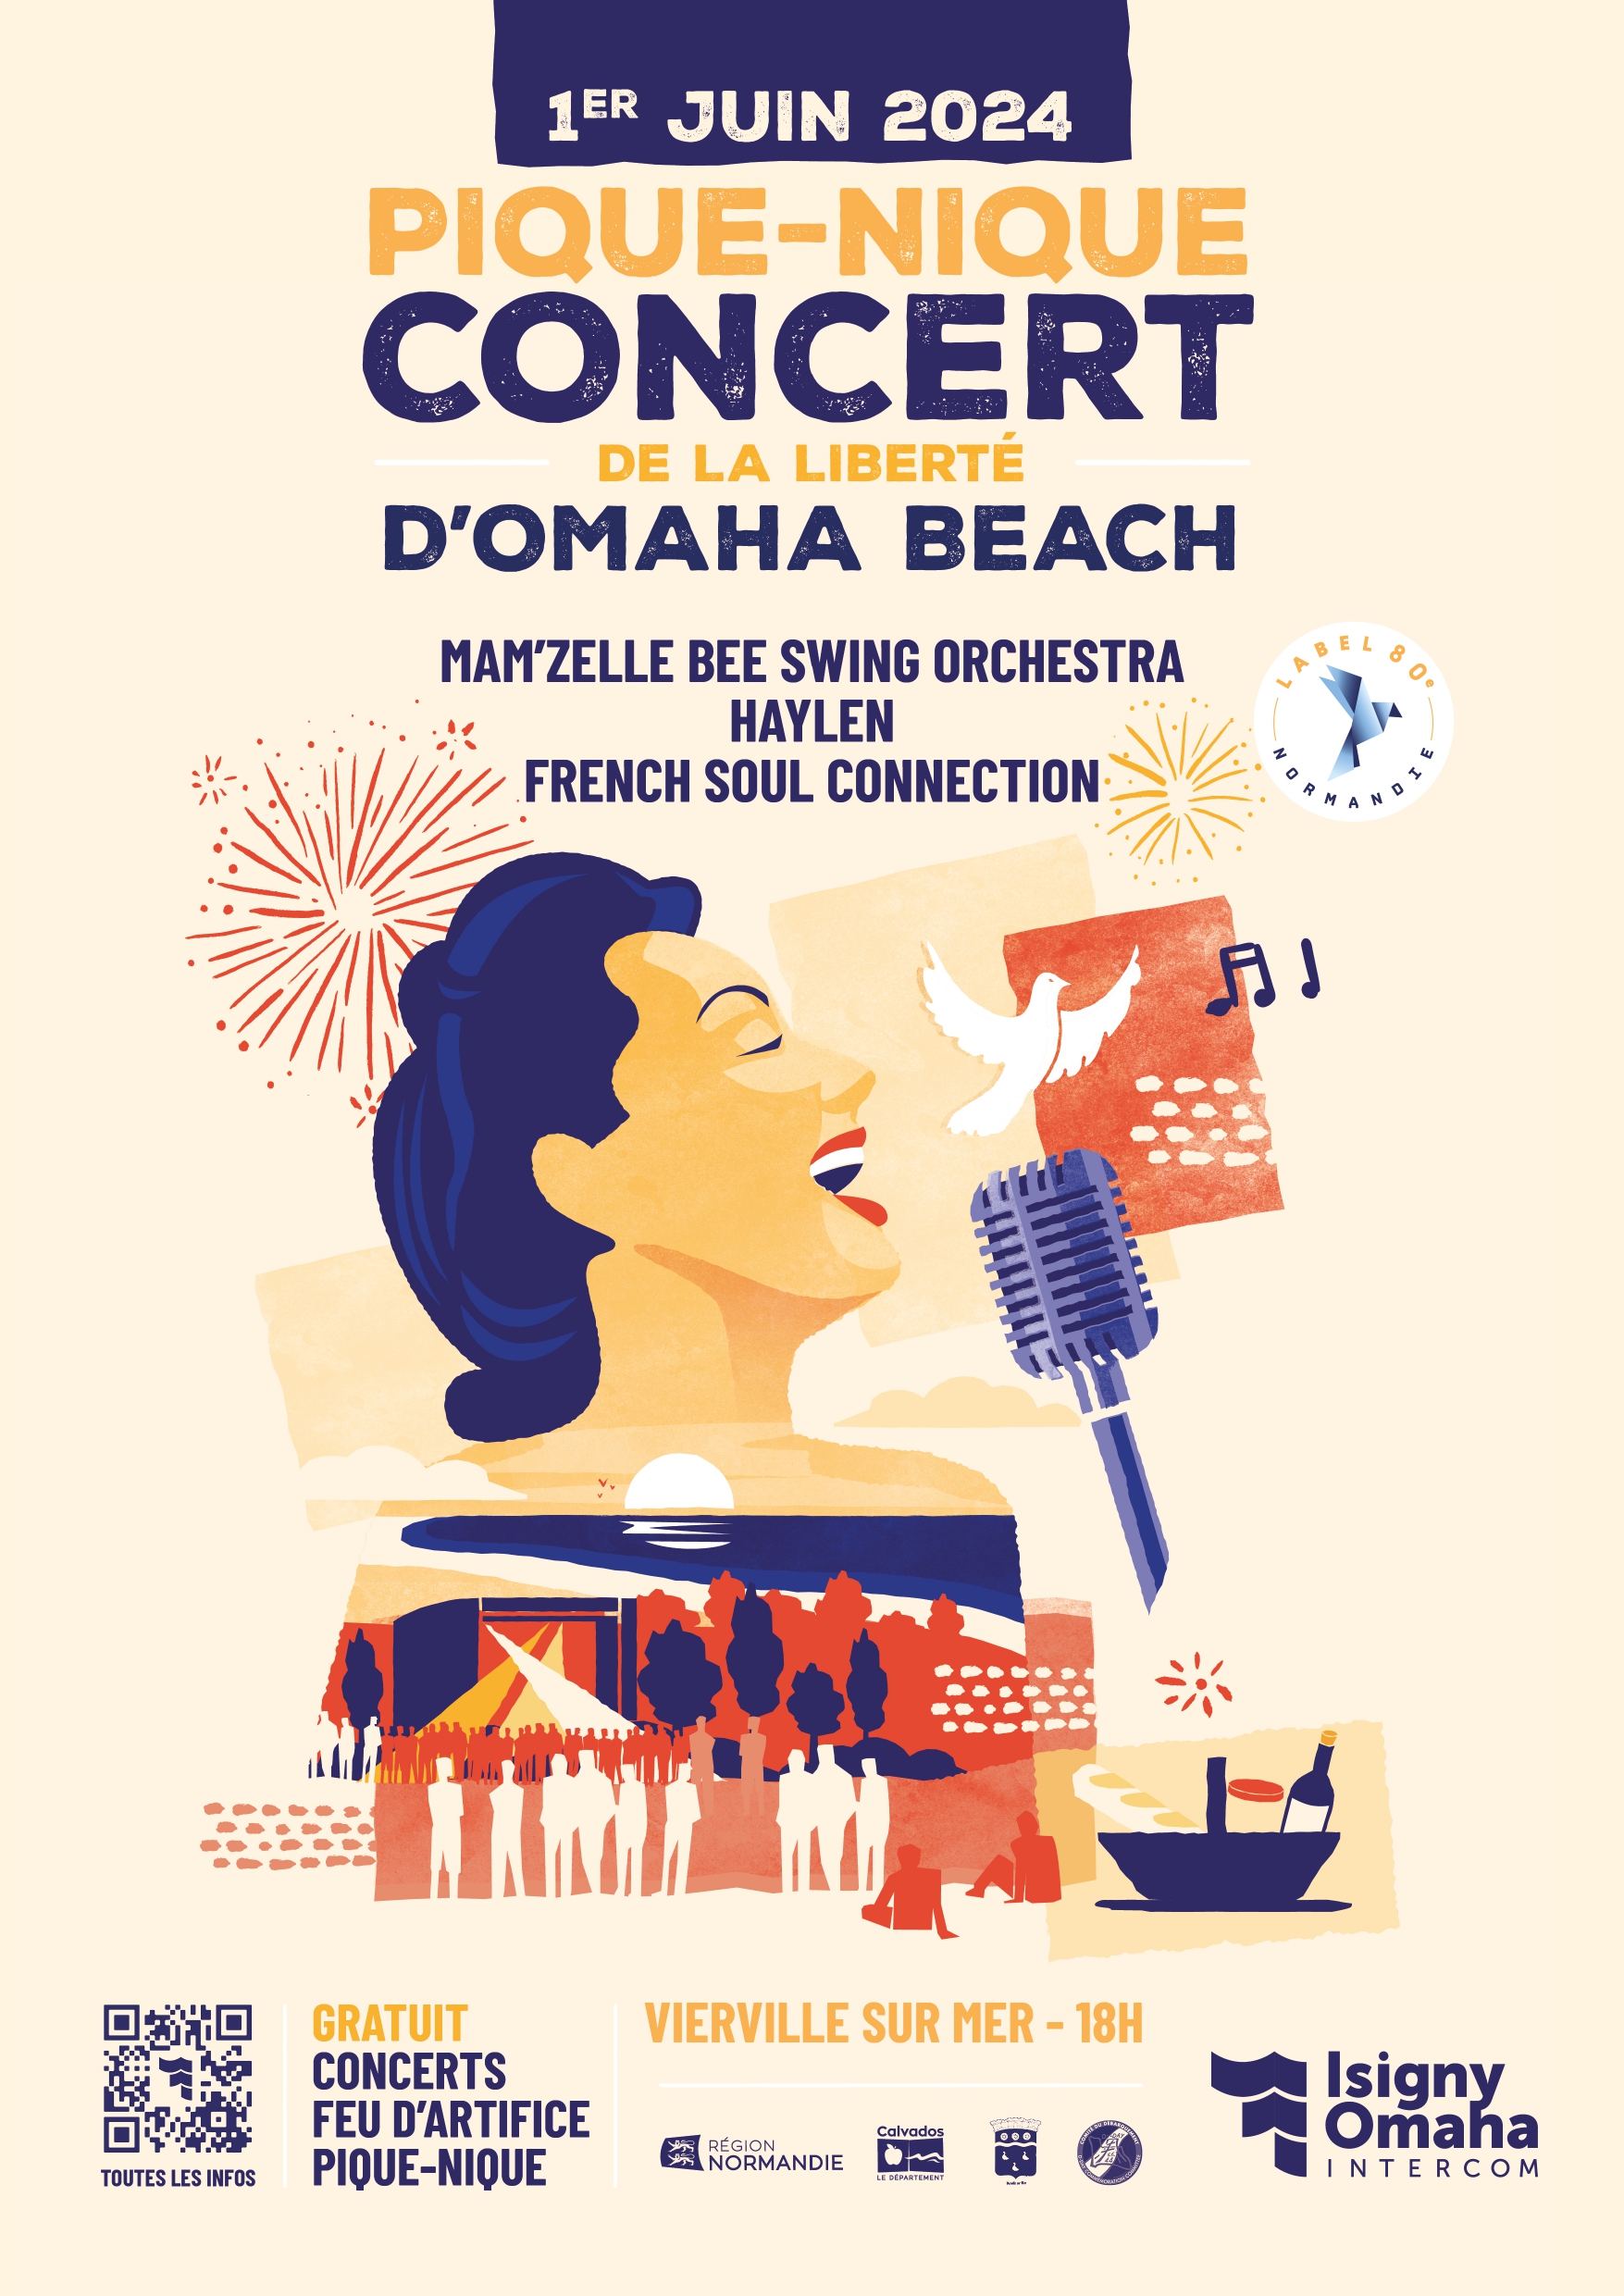 Pique-Nique Concert de la Liberté d'Omaha Beach